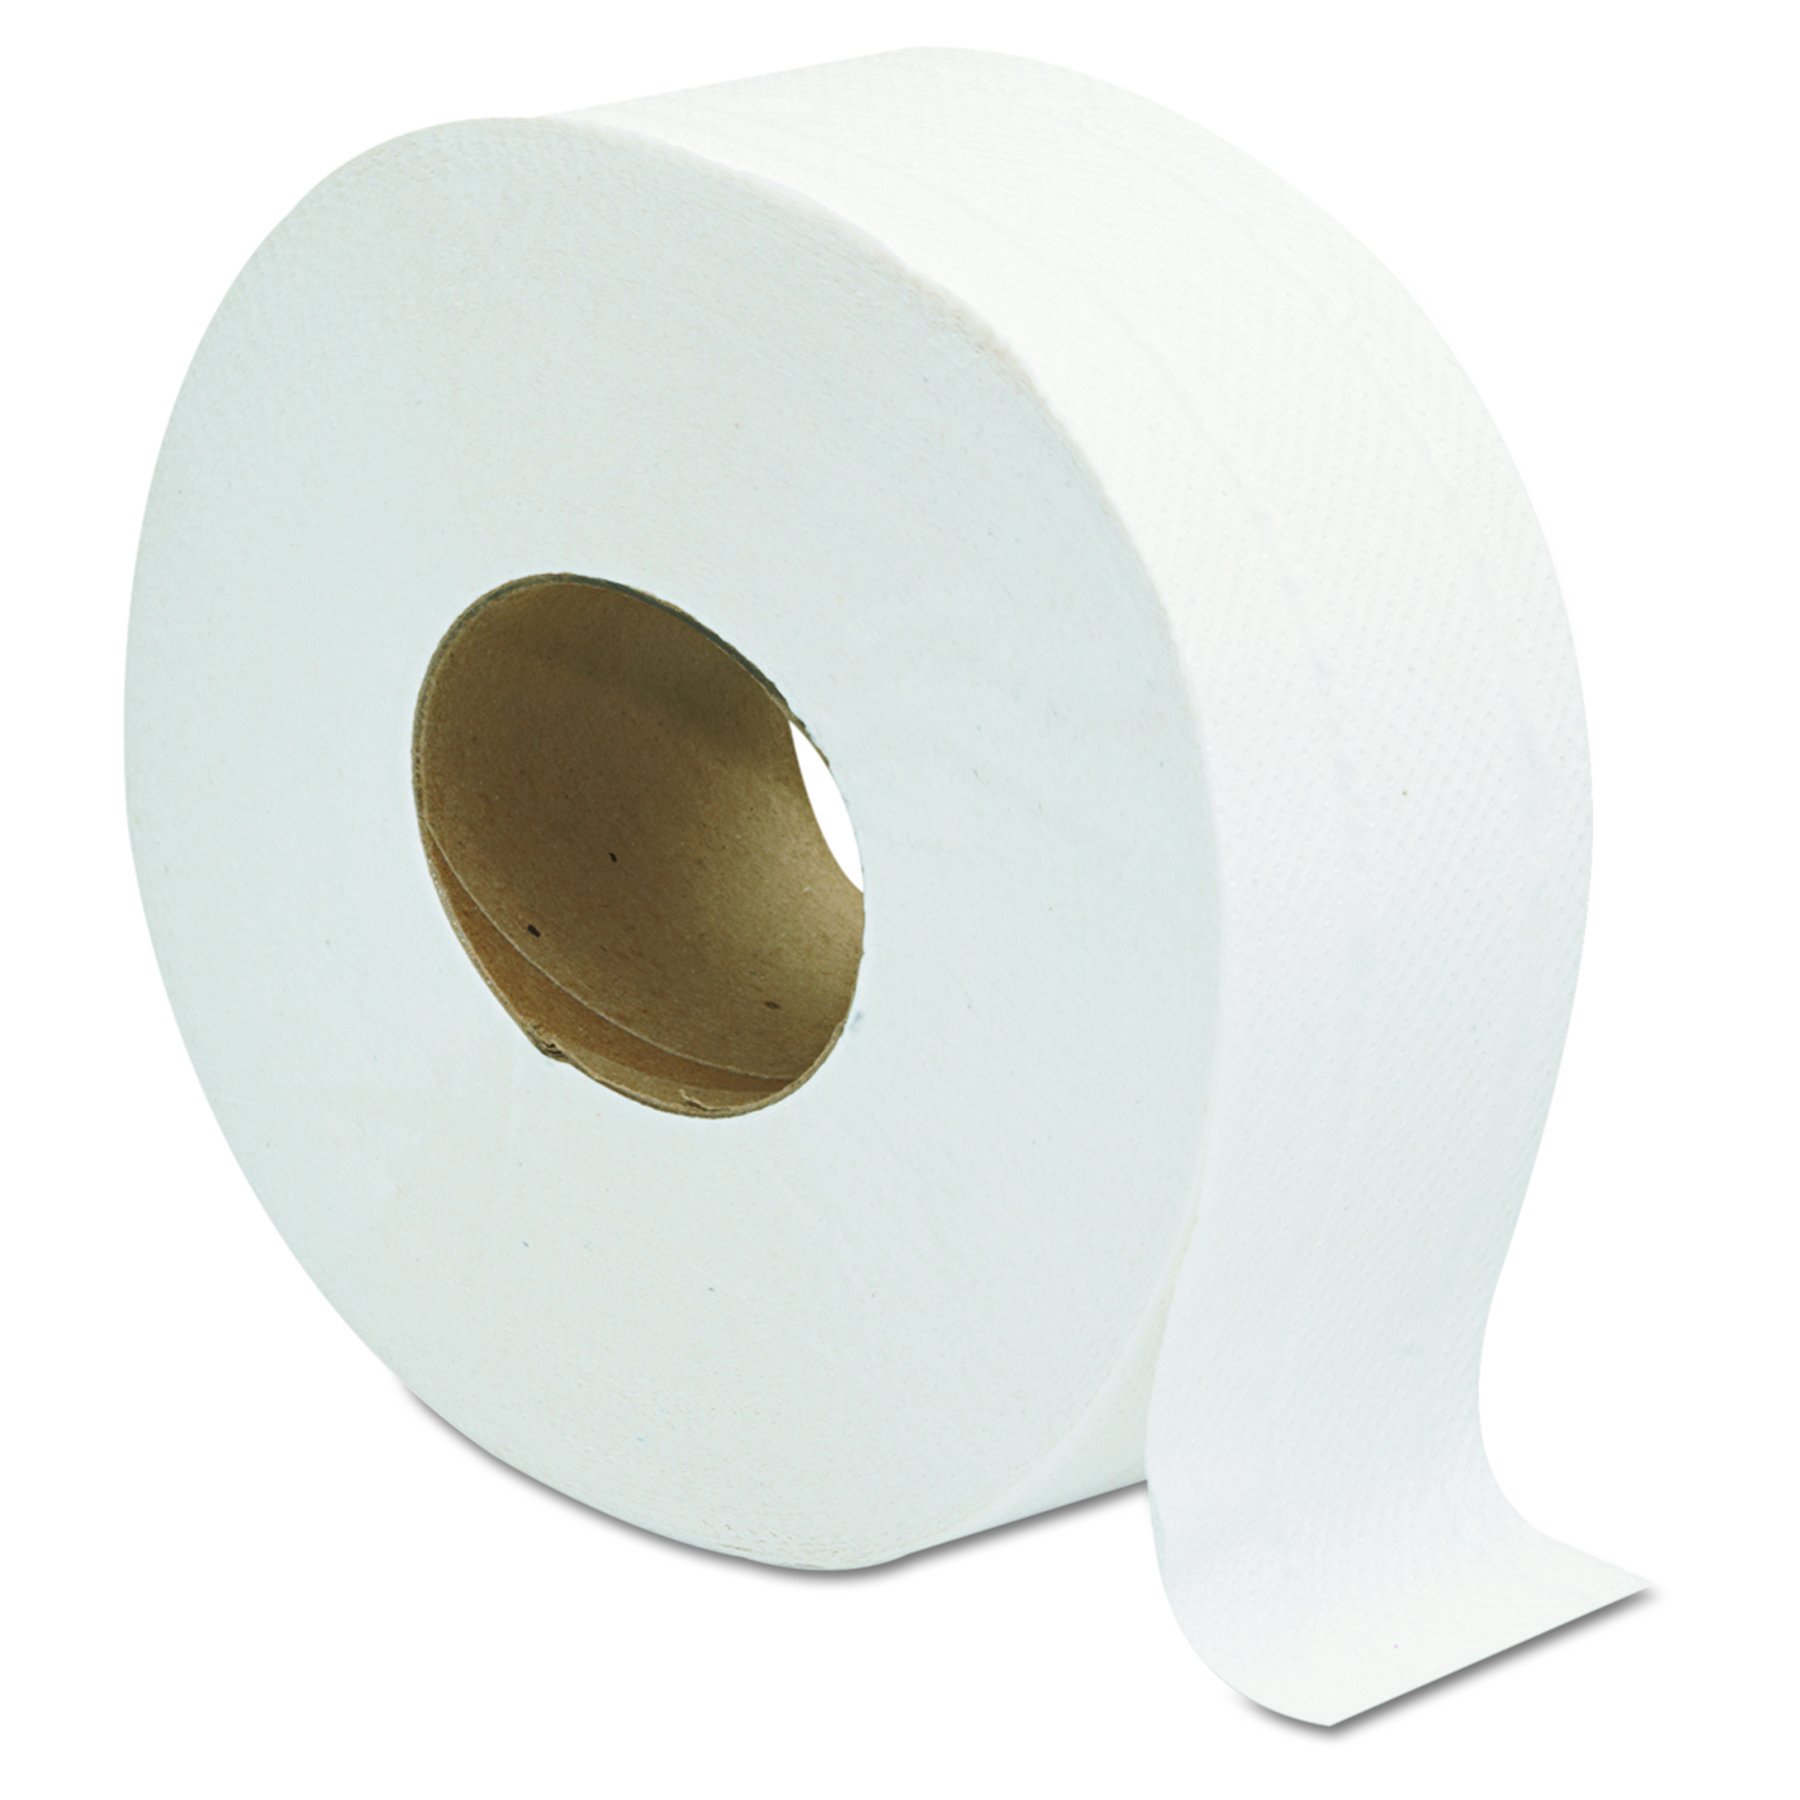 6RL Jumbo Roll Toilet Paper
2Ply (1M Sheet)